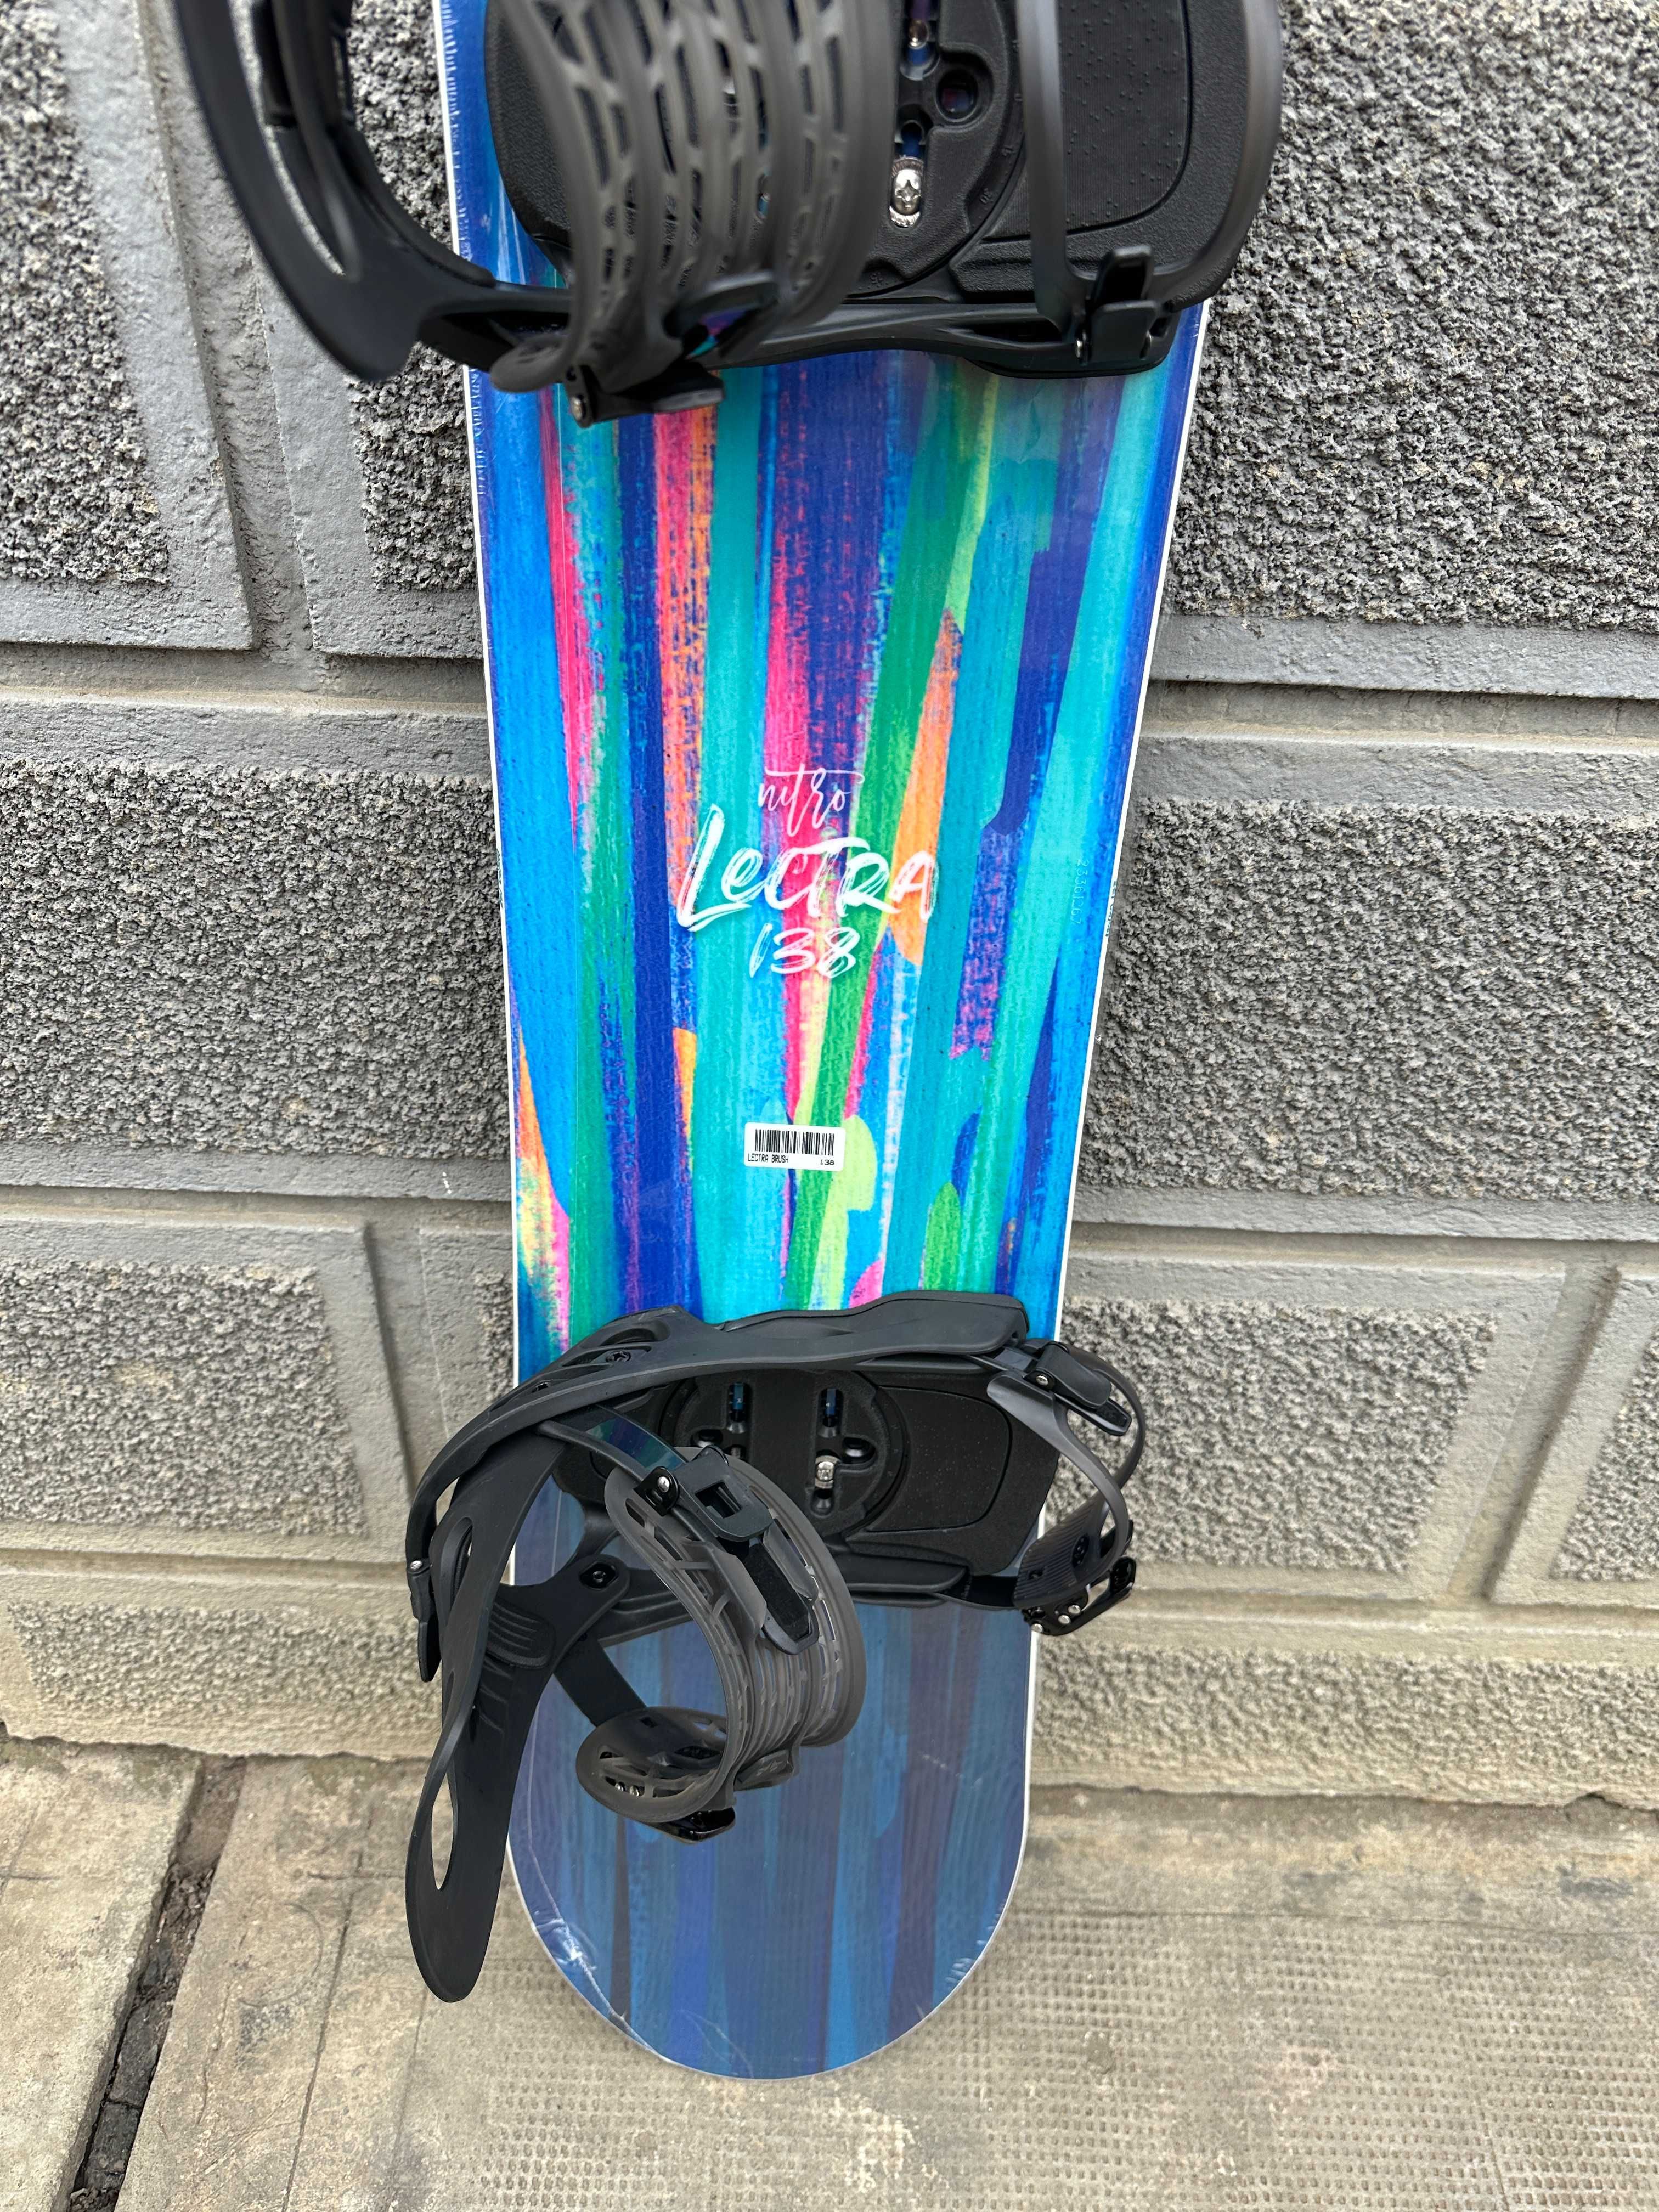 placa noua snowboard nitro lectra brush rental L138cm